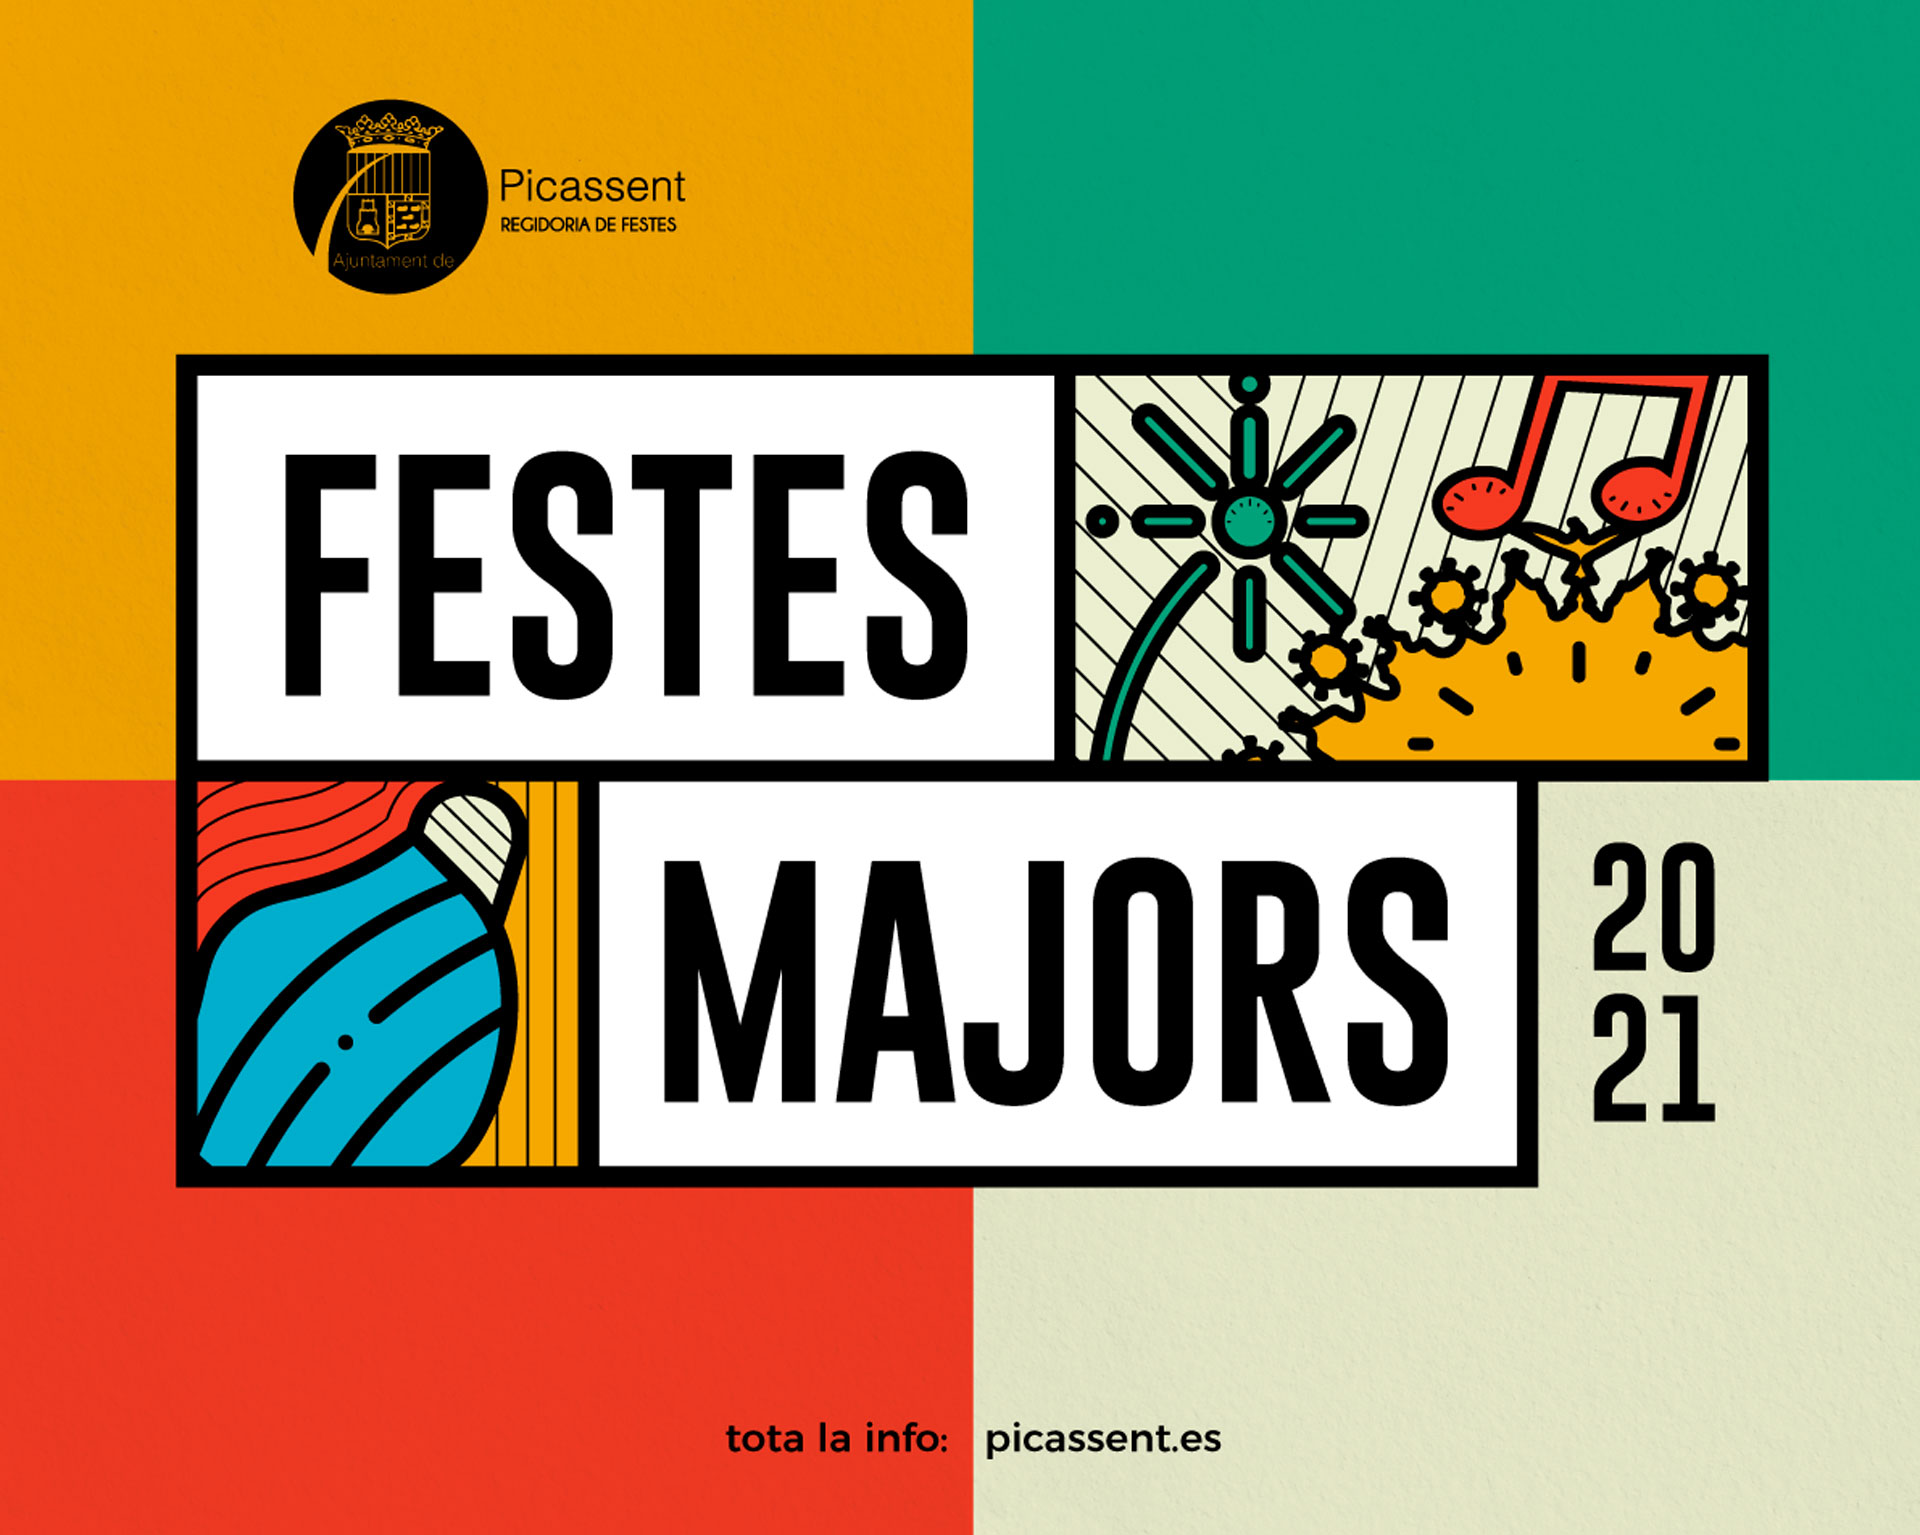 Festes Majors Picassent - Fiestas Mayores Picassent